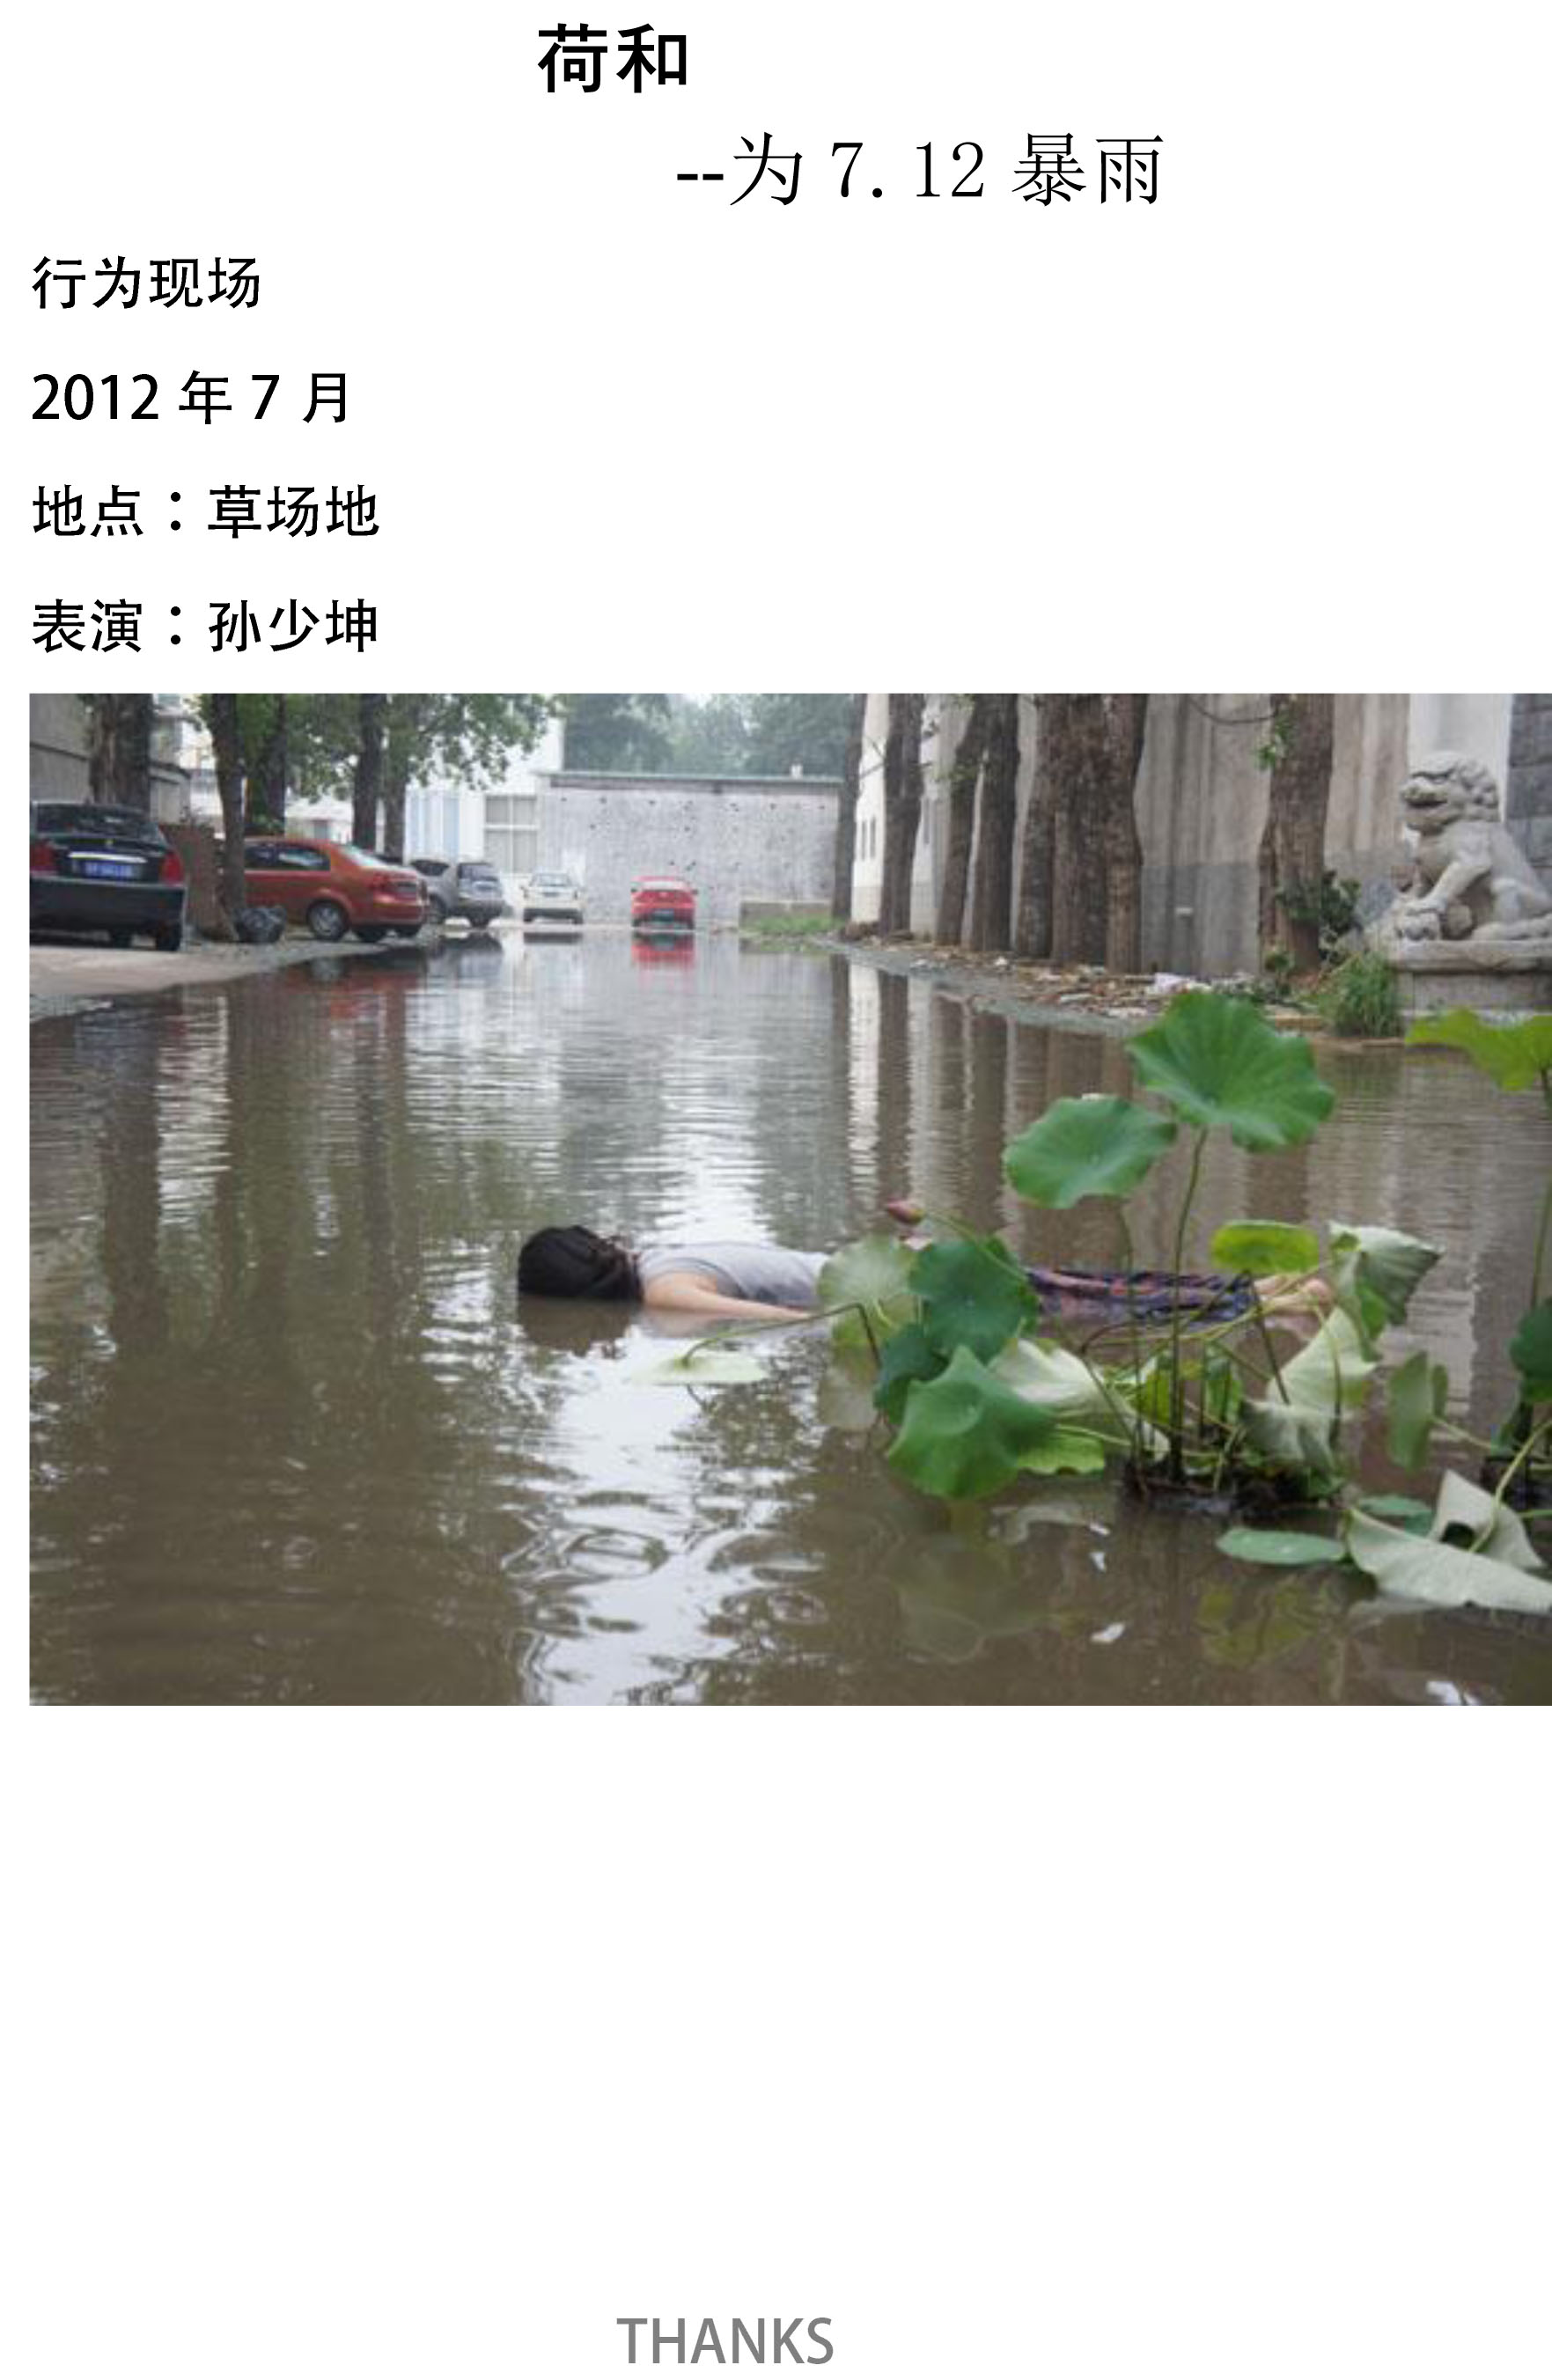 Harmony/2012/materials: lotus, Beijing flood water/Cao shang di